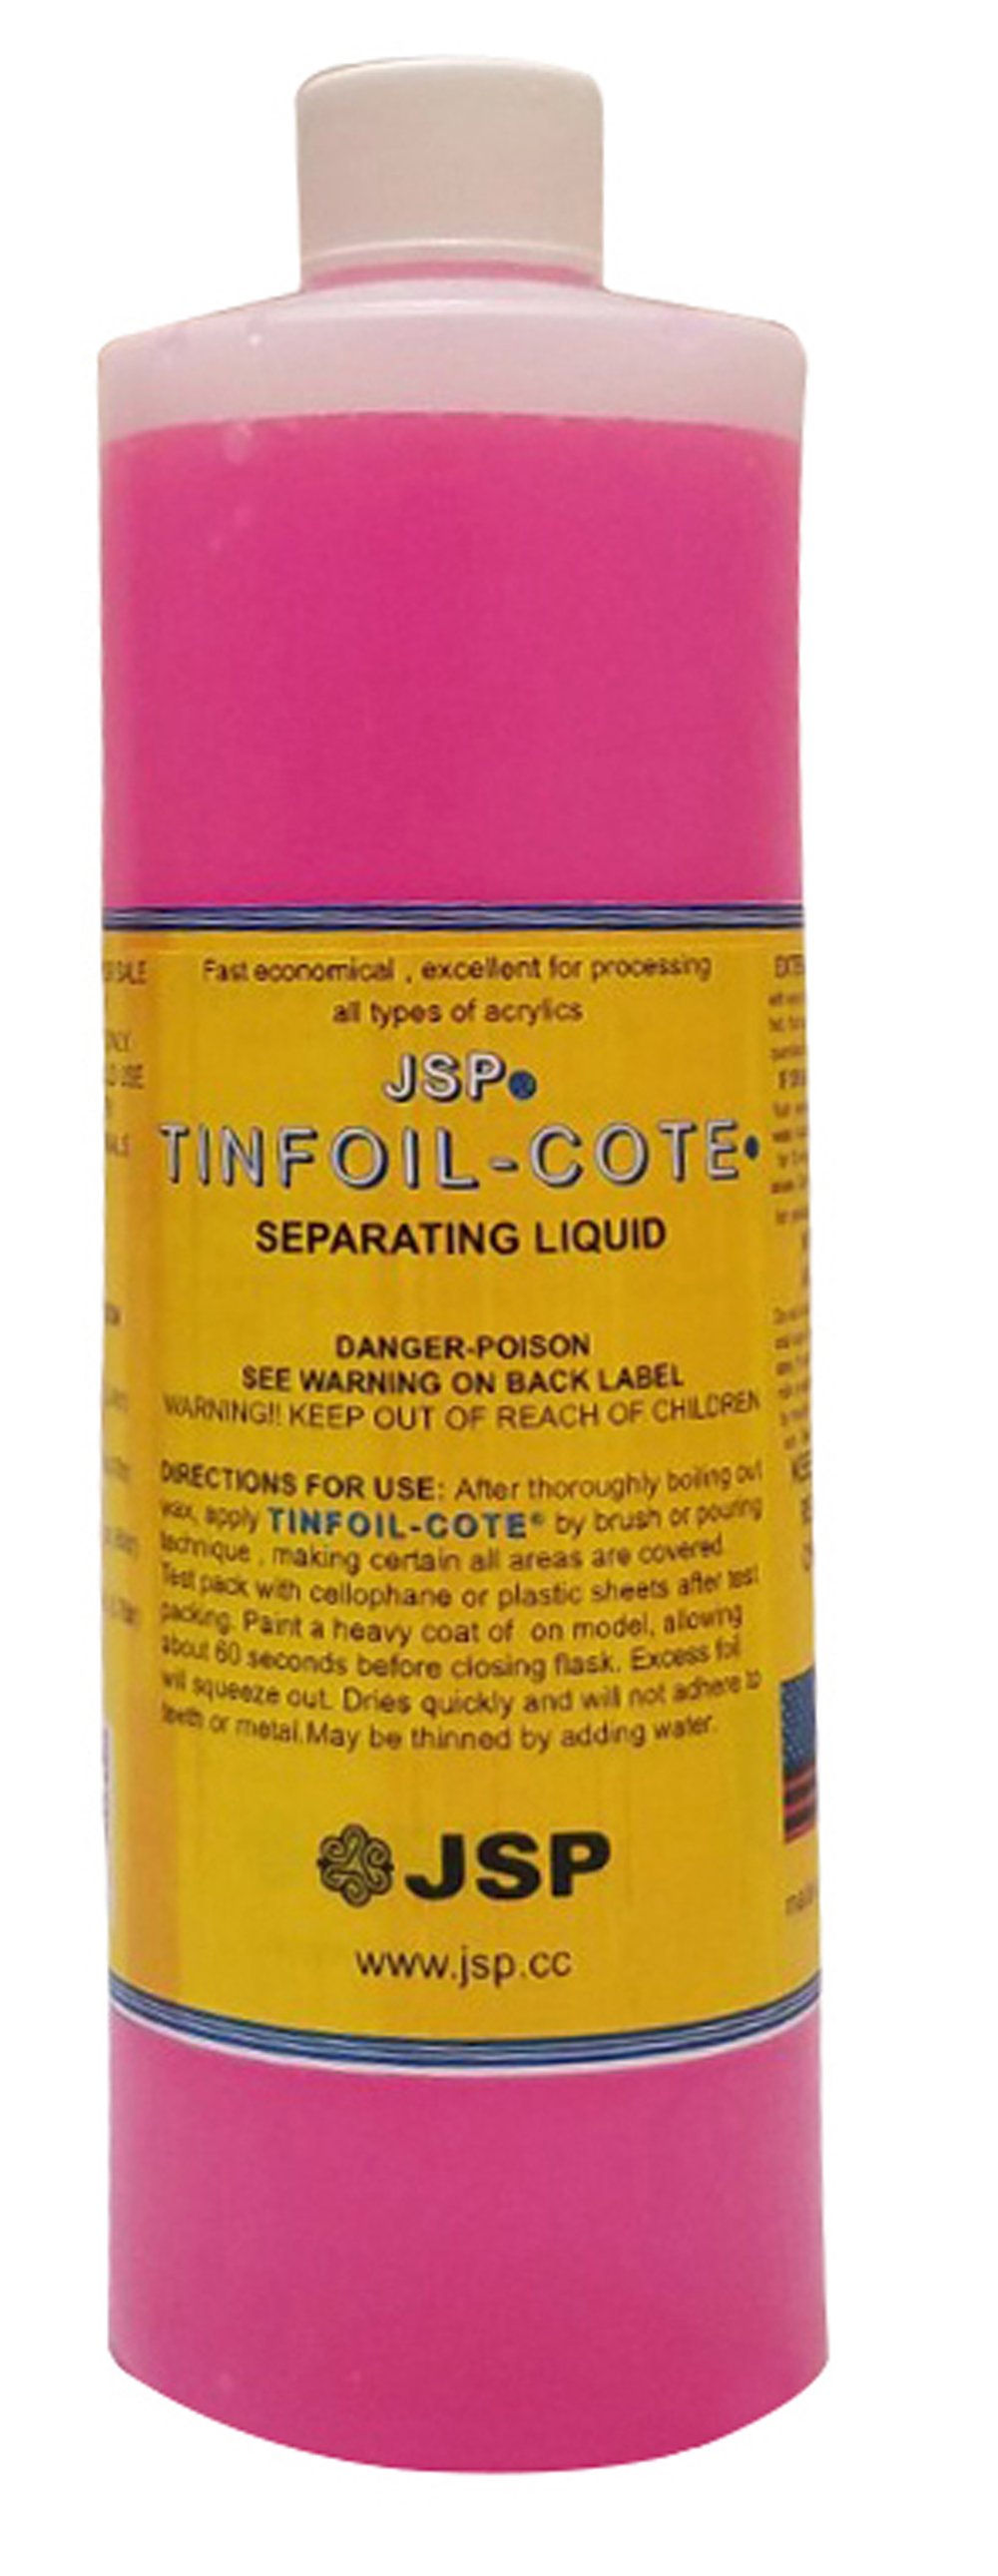 JSP® TINFOIL-COTE SEPARATING LIQUID (thick)16 ozs - Click Image to Close